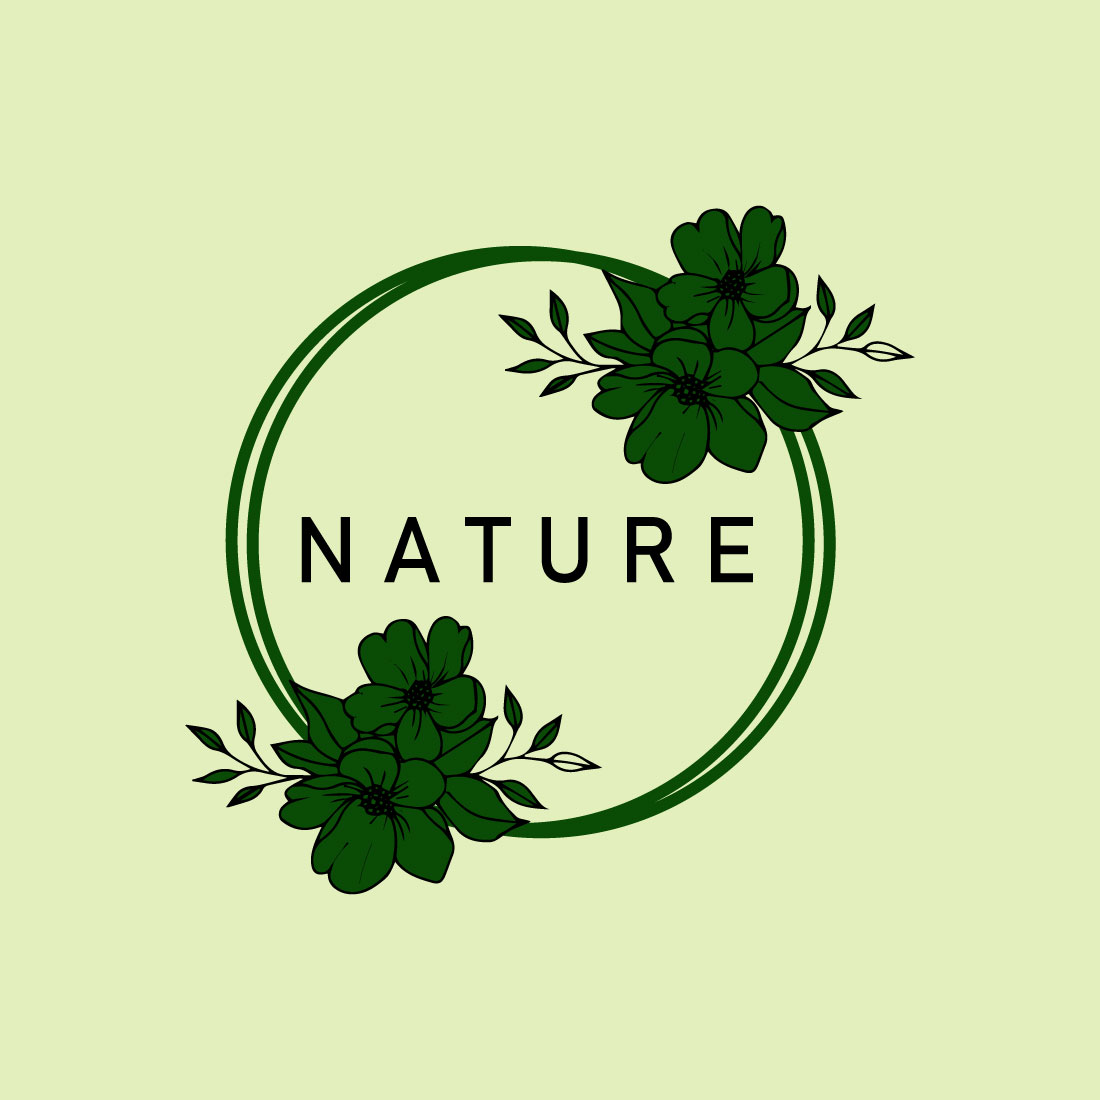 Free hand drawn botanical logo preview image.